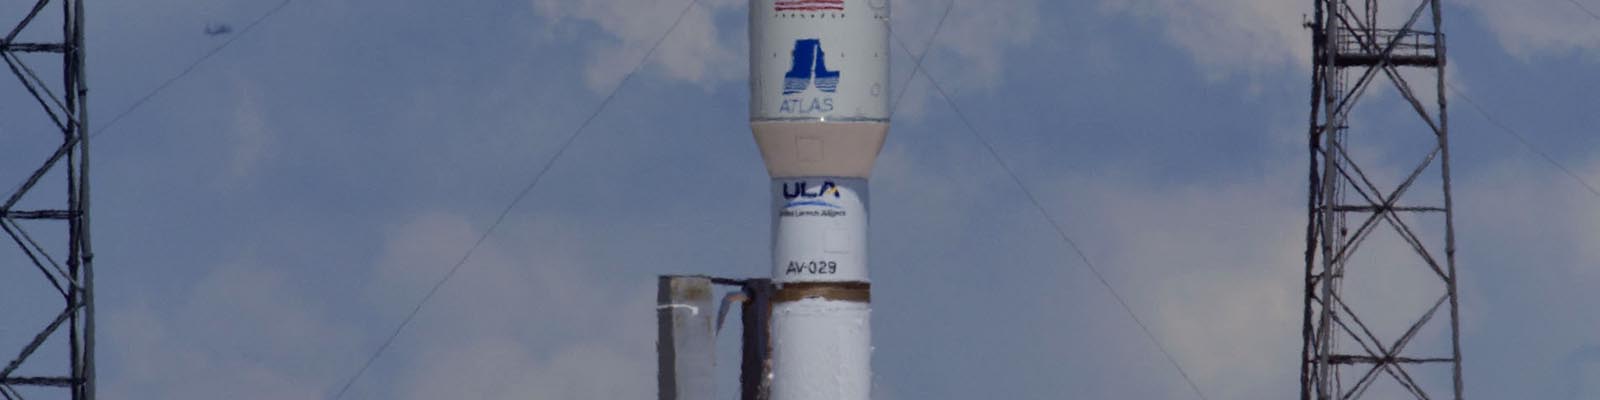 Lancement de la sonde Juno par la fusée Atlas V